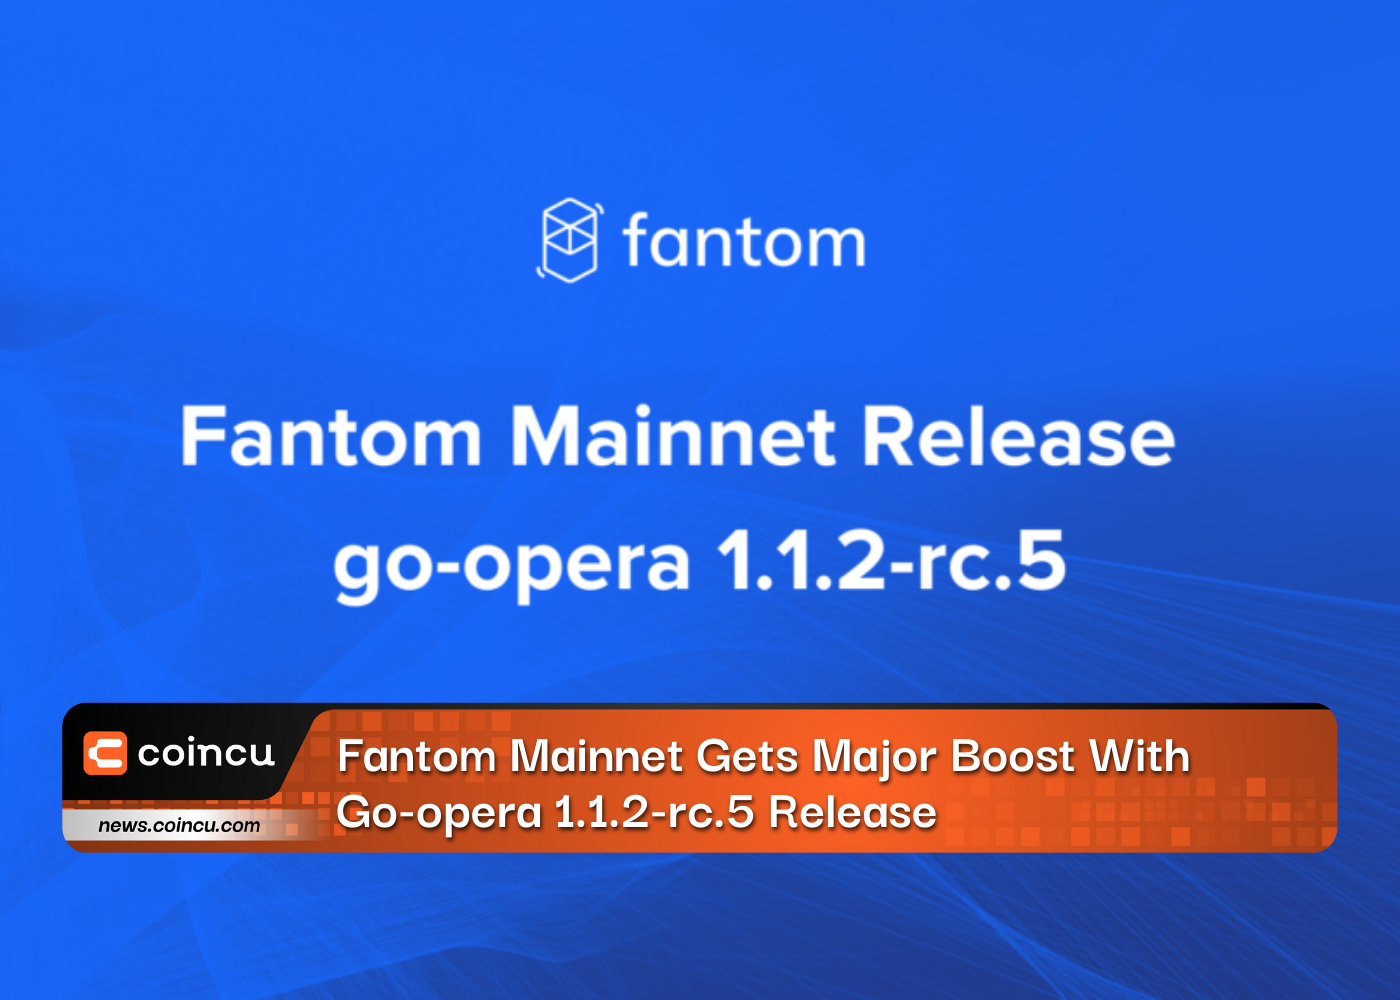 Fantom 메인넷은 Go-opera 1.1.2-rc.5 릴리스로 큰 발전을 이루었습니다.